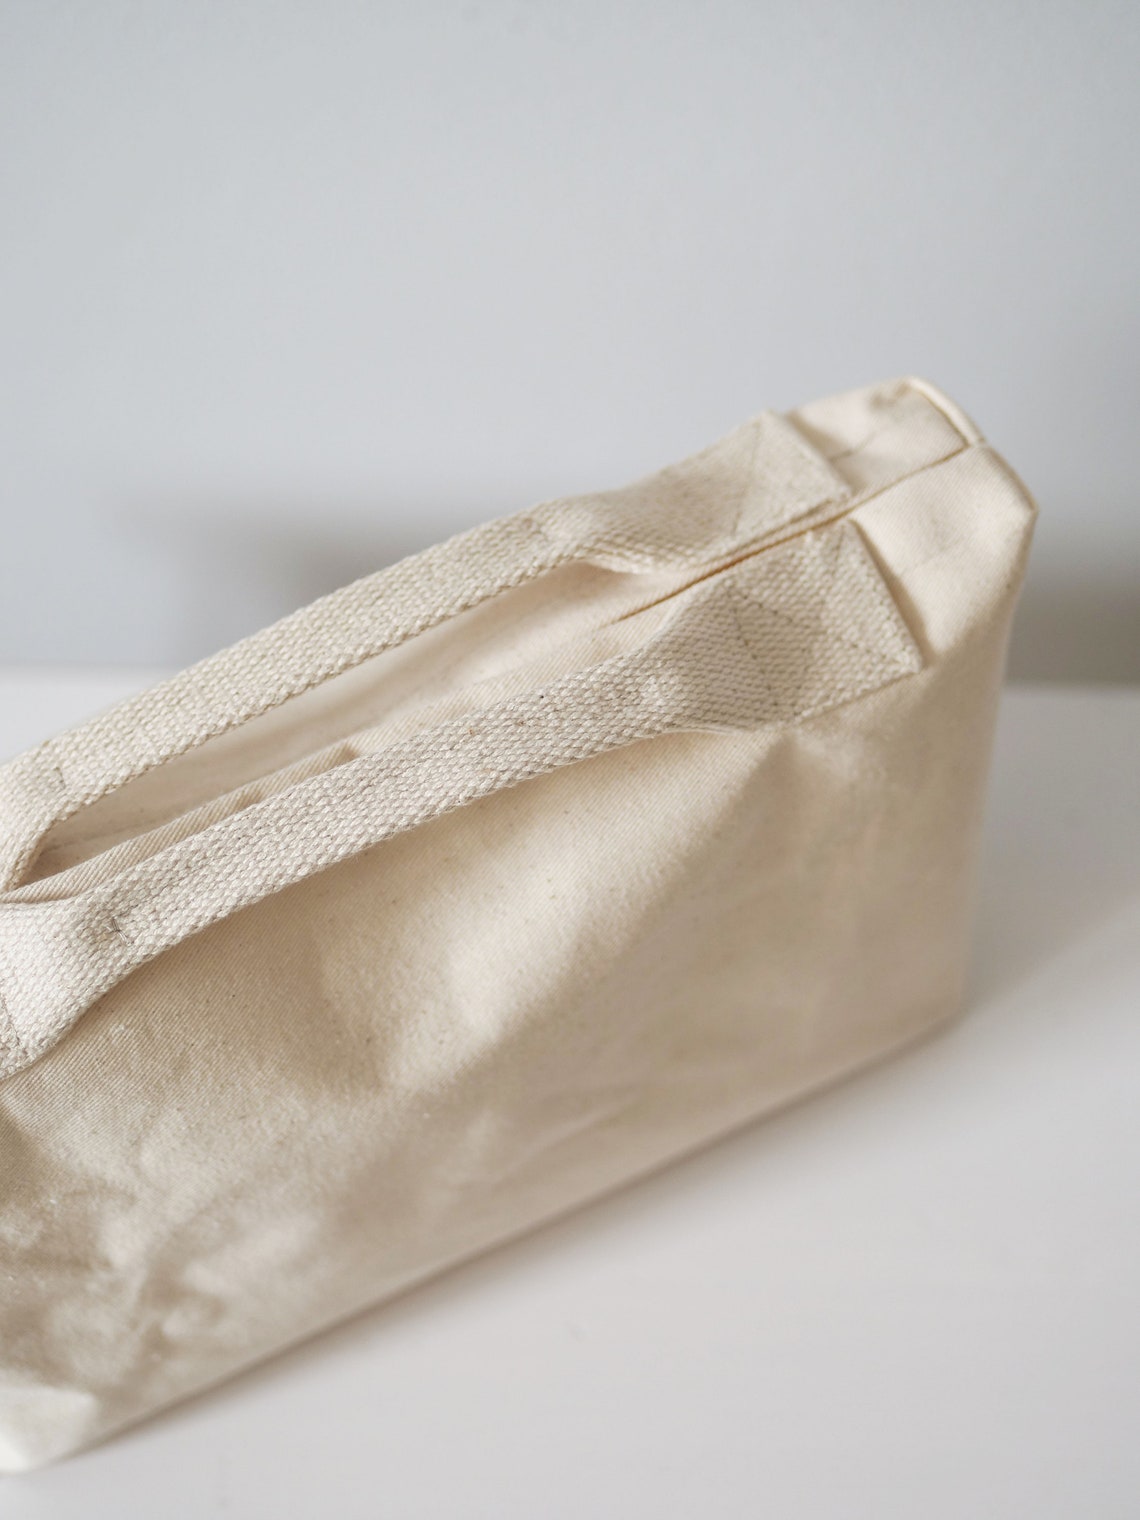 Canvas Bag Simple Tote 3 sizes Shopping bag Minimalist | Etsy